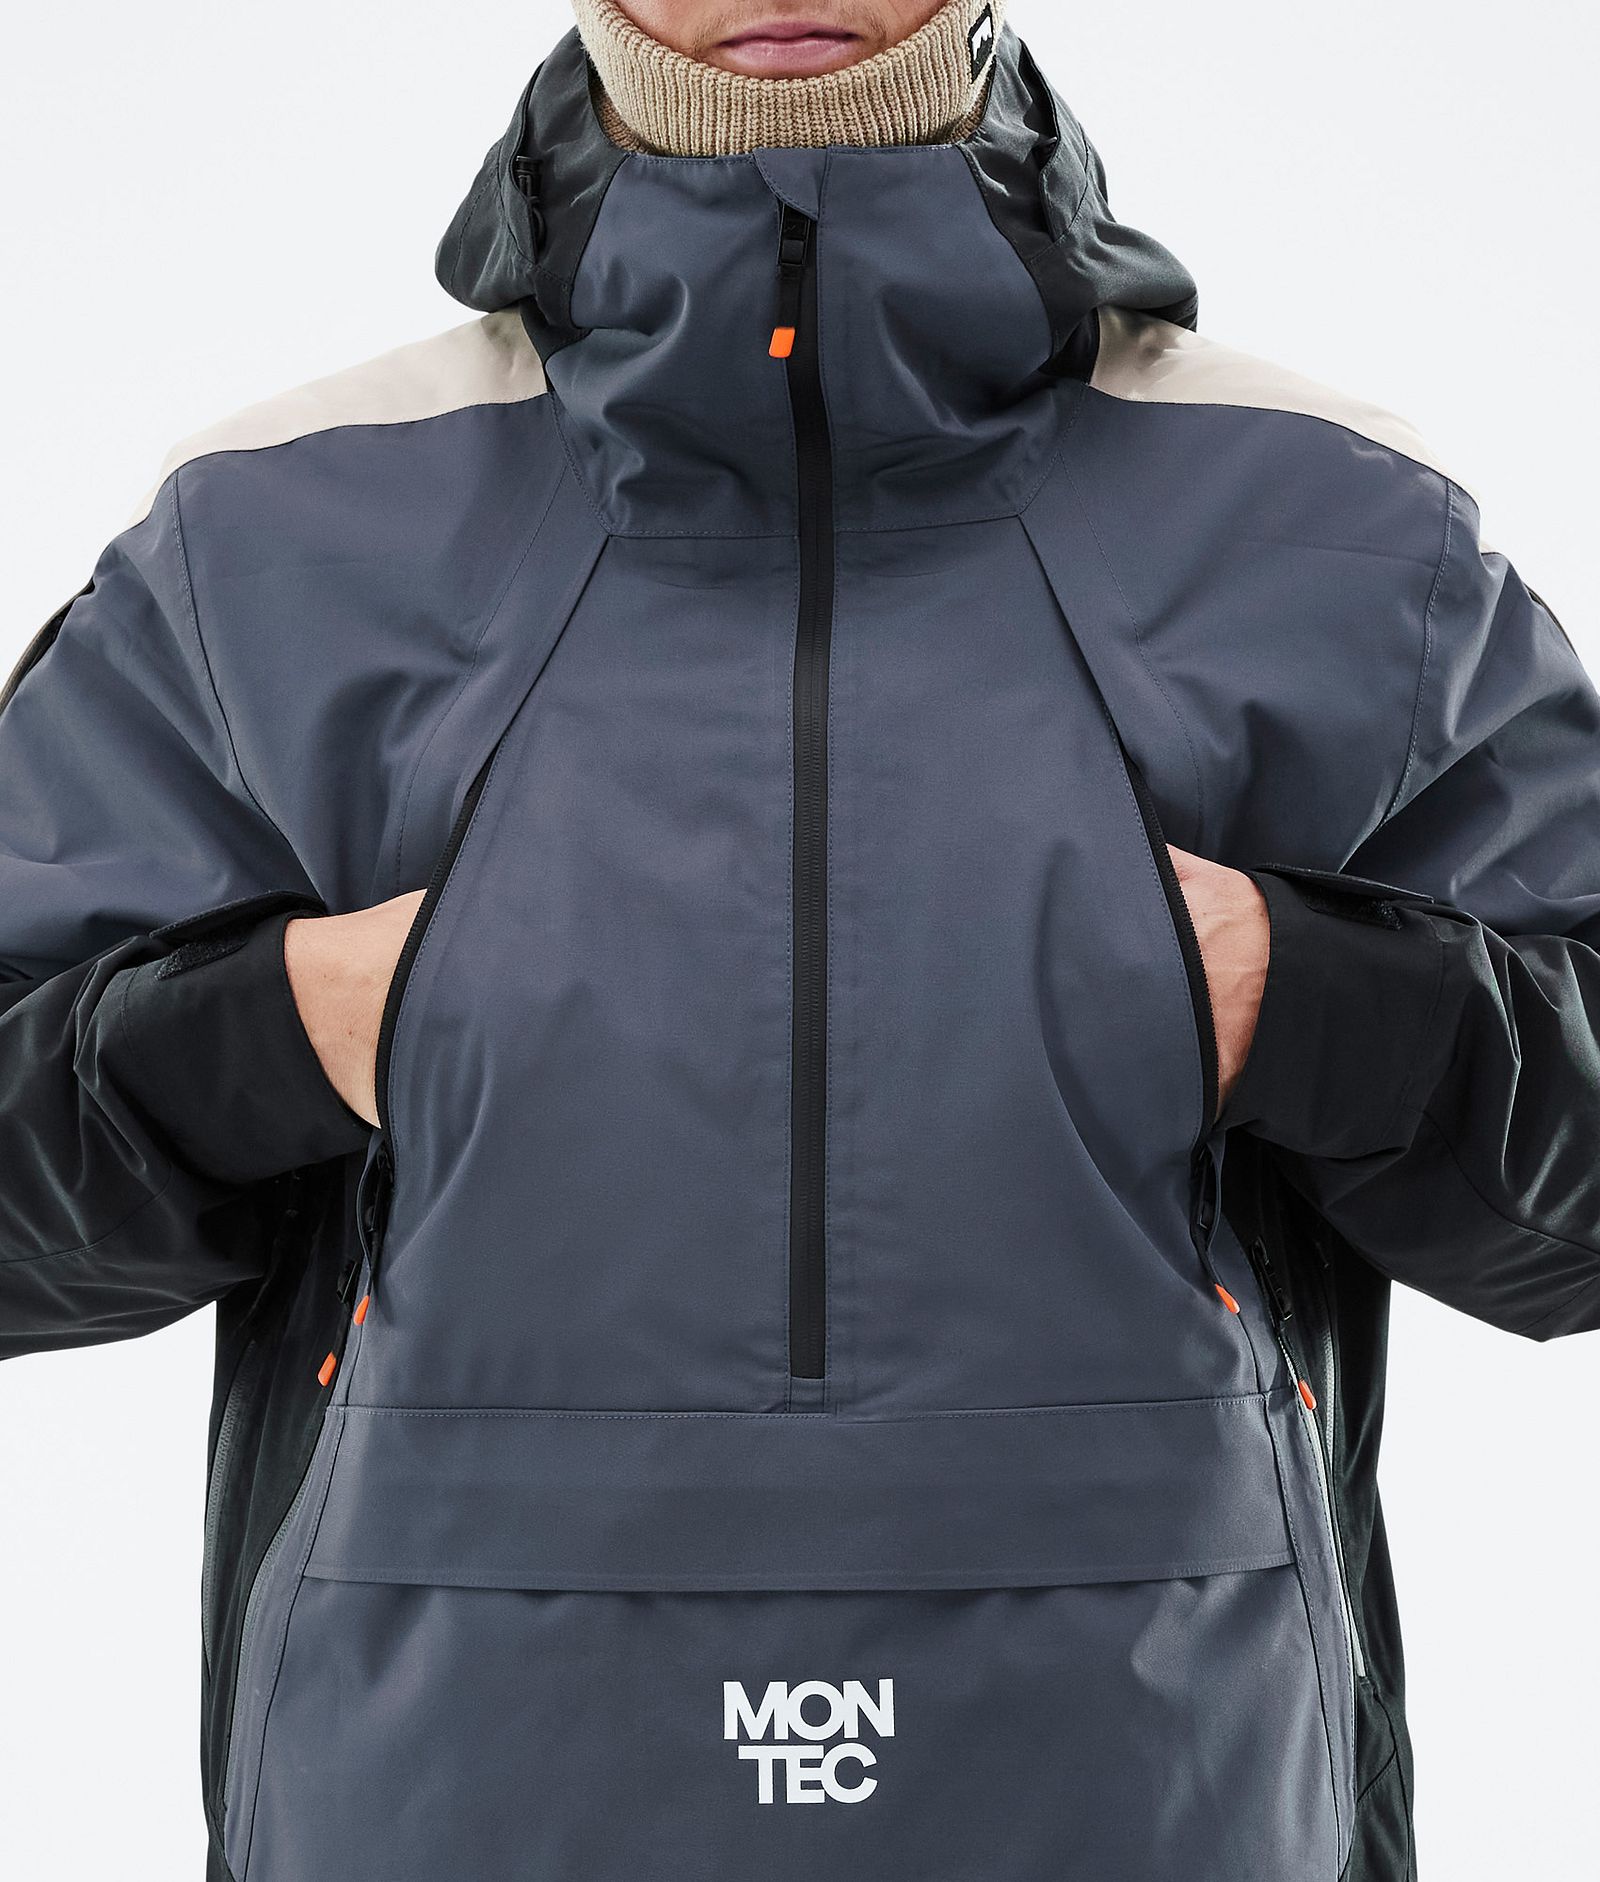 Apex Snowboard Jacket Men Metal Blue/Black/Sand Renewed